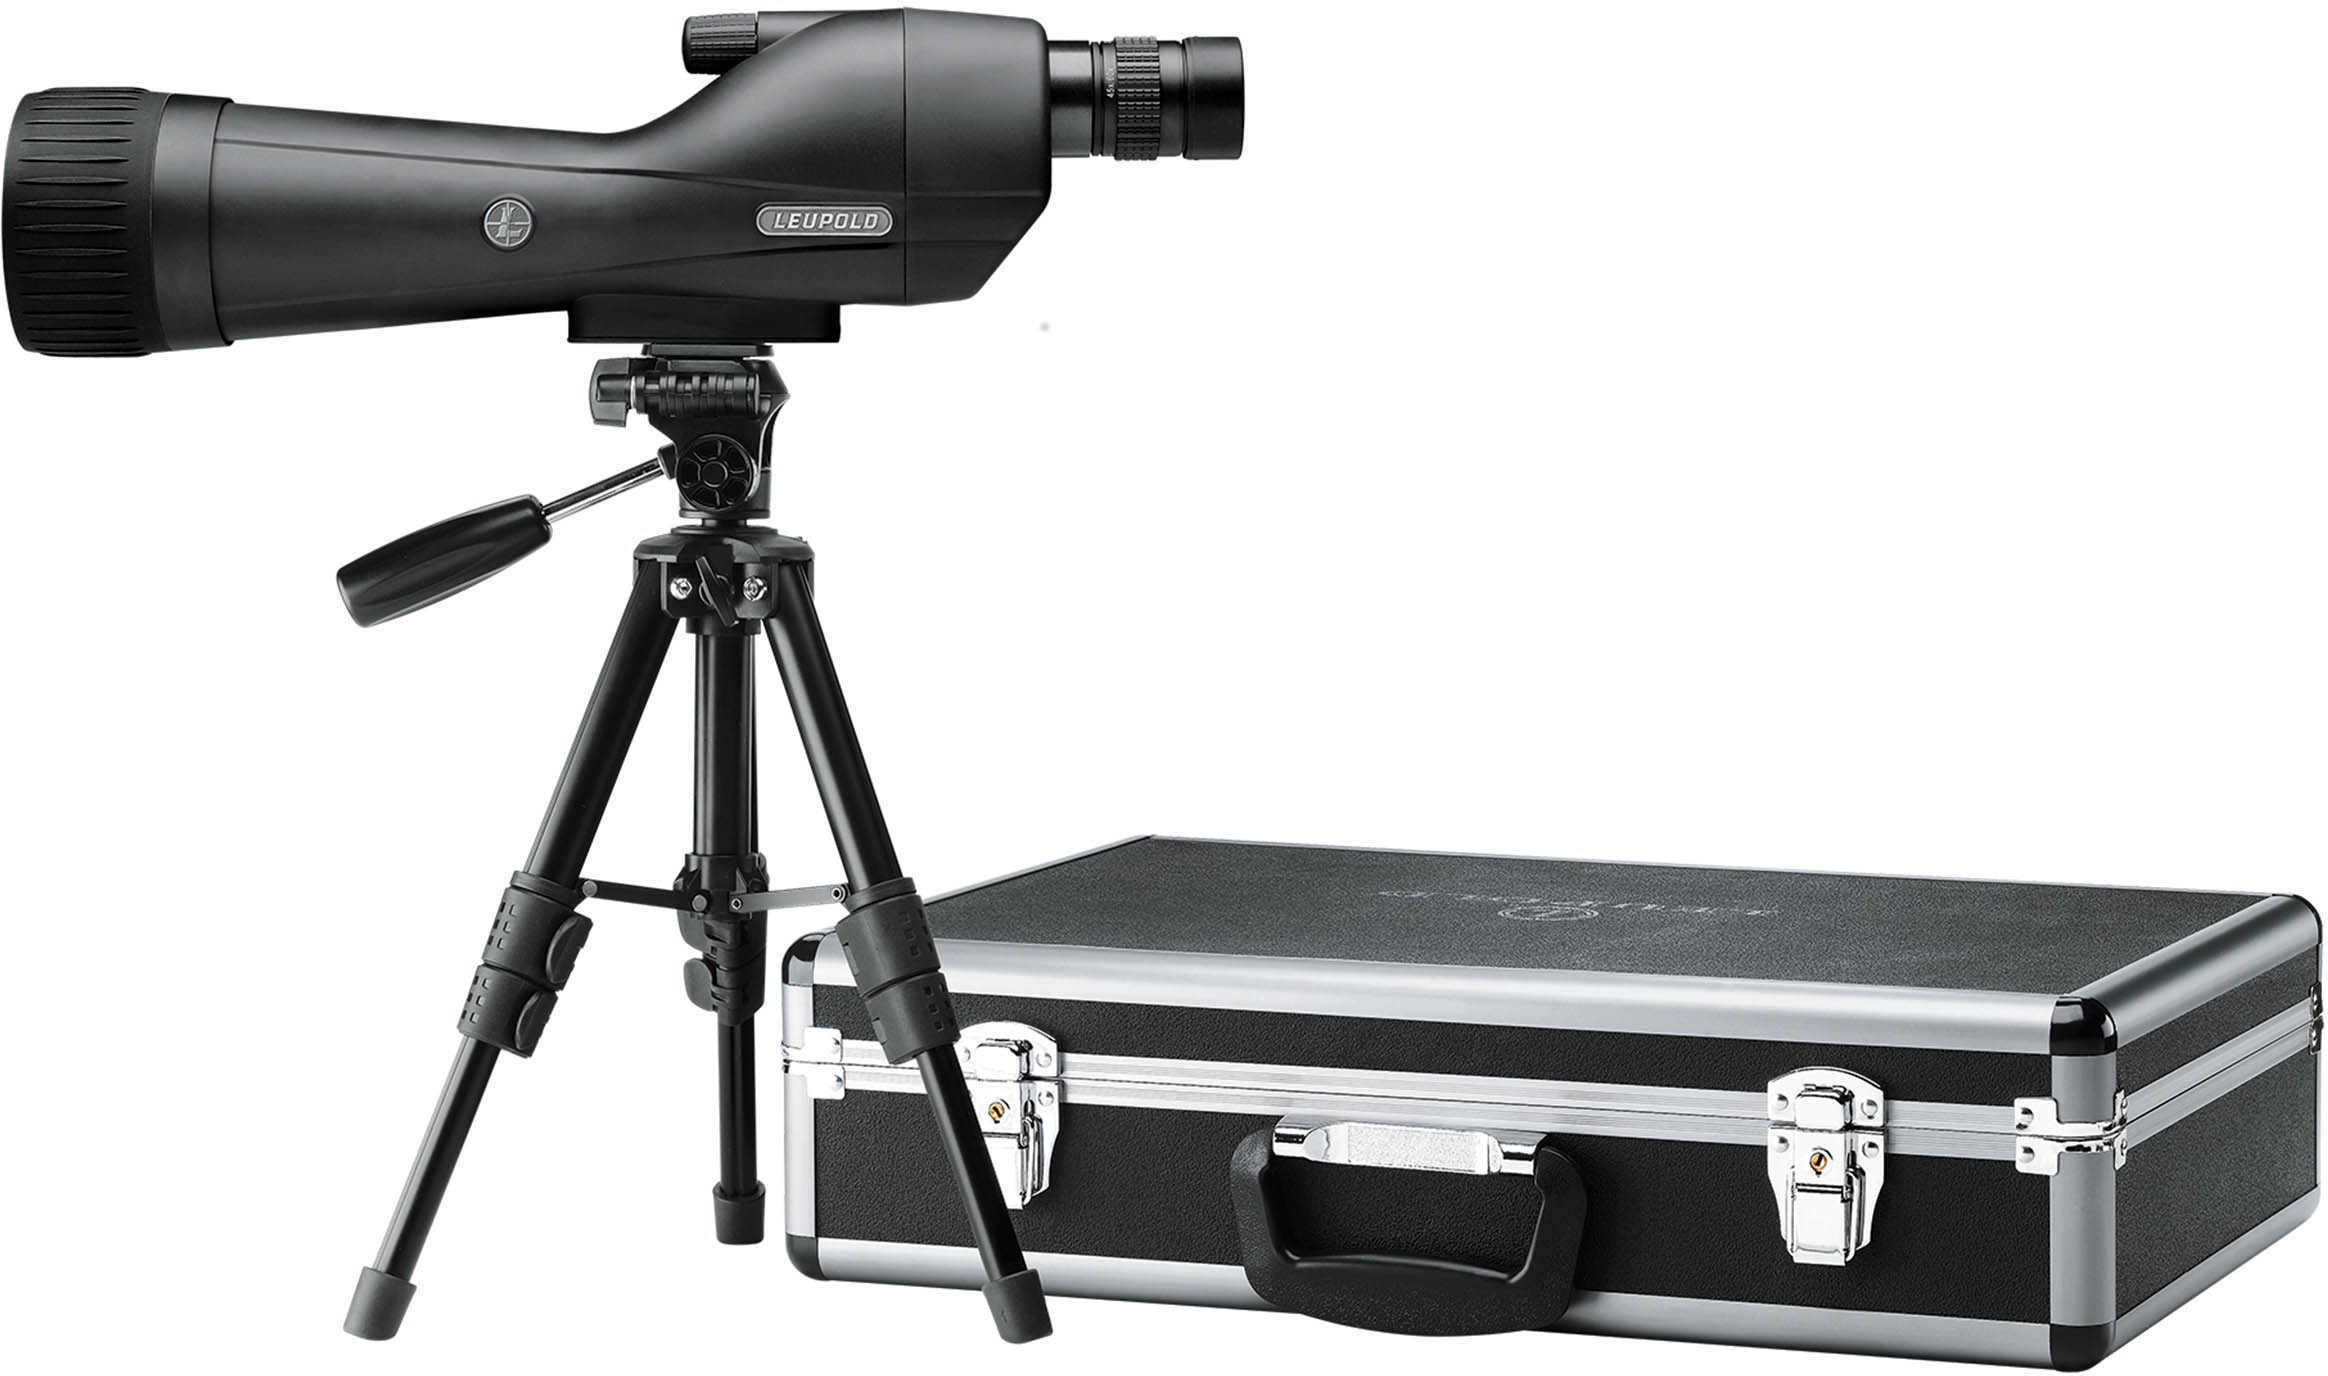 Leupold SX-1 Ventana Spotting Scope Kit 20-60X80 Black/Gray Includes Compact Tripod Hard Case And Lens Cover 170760